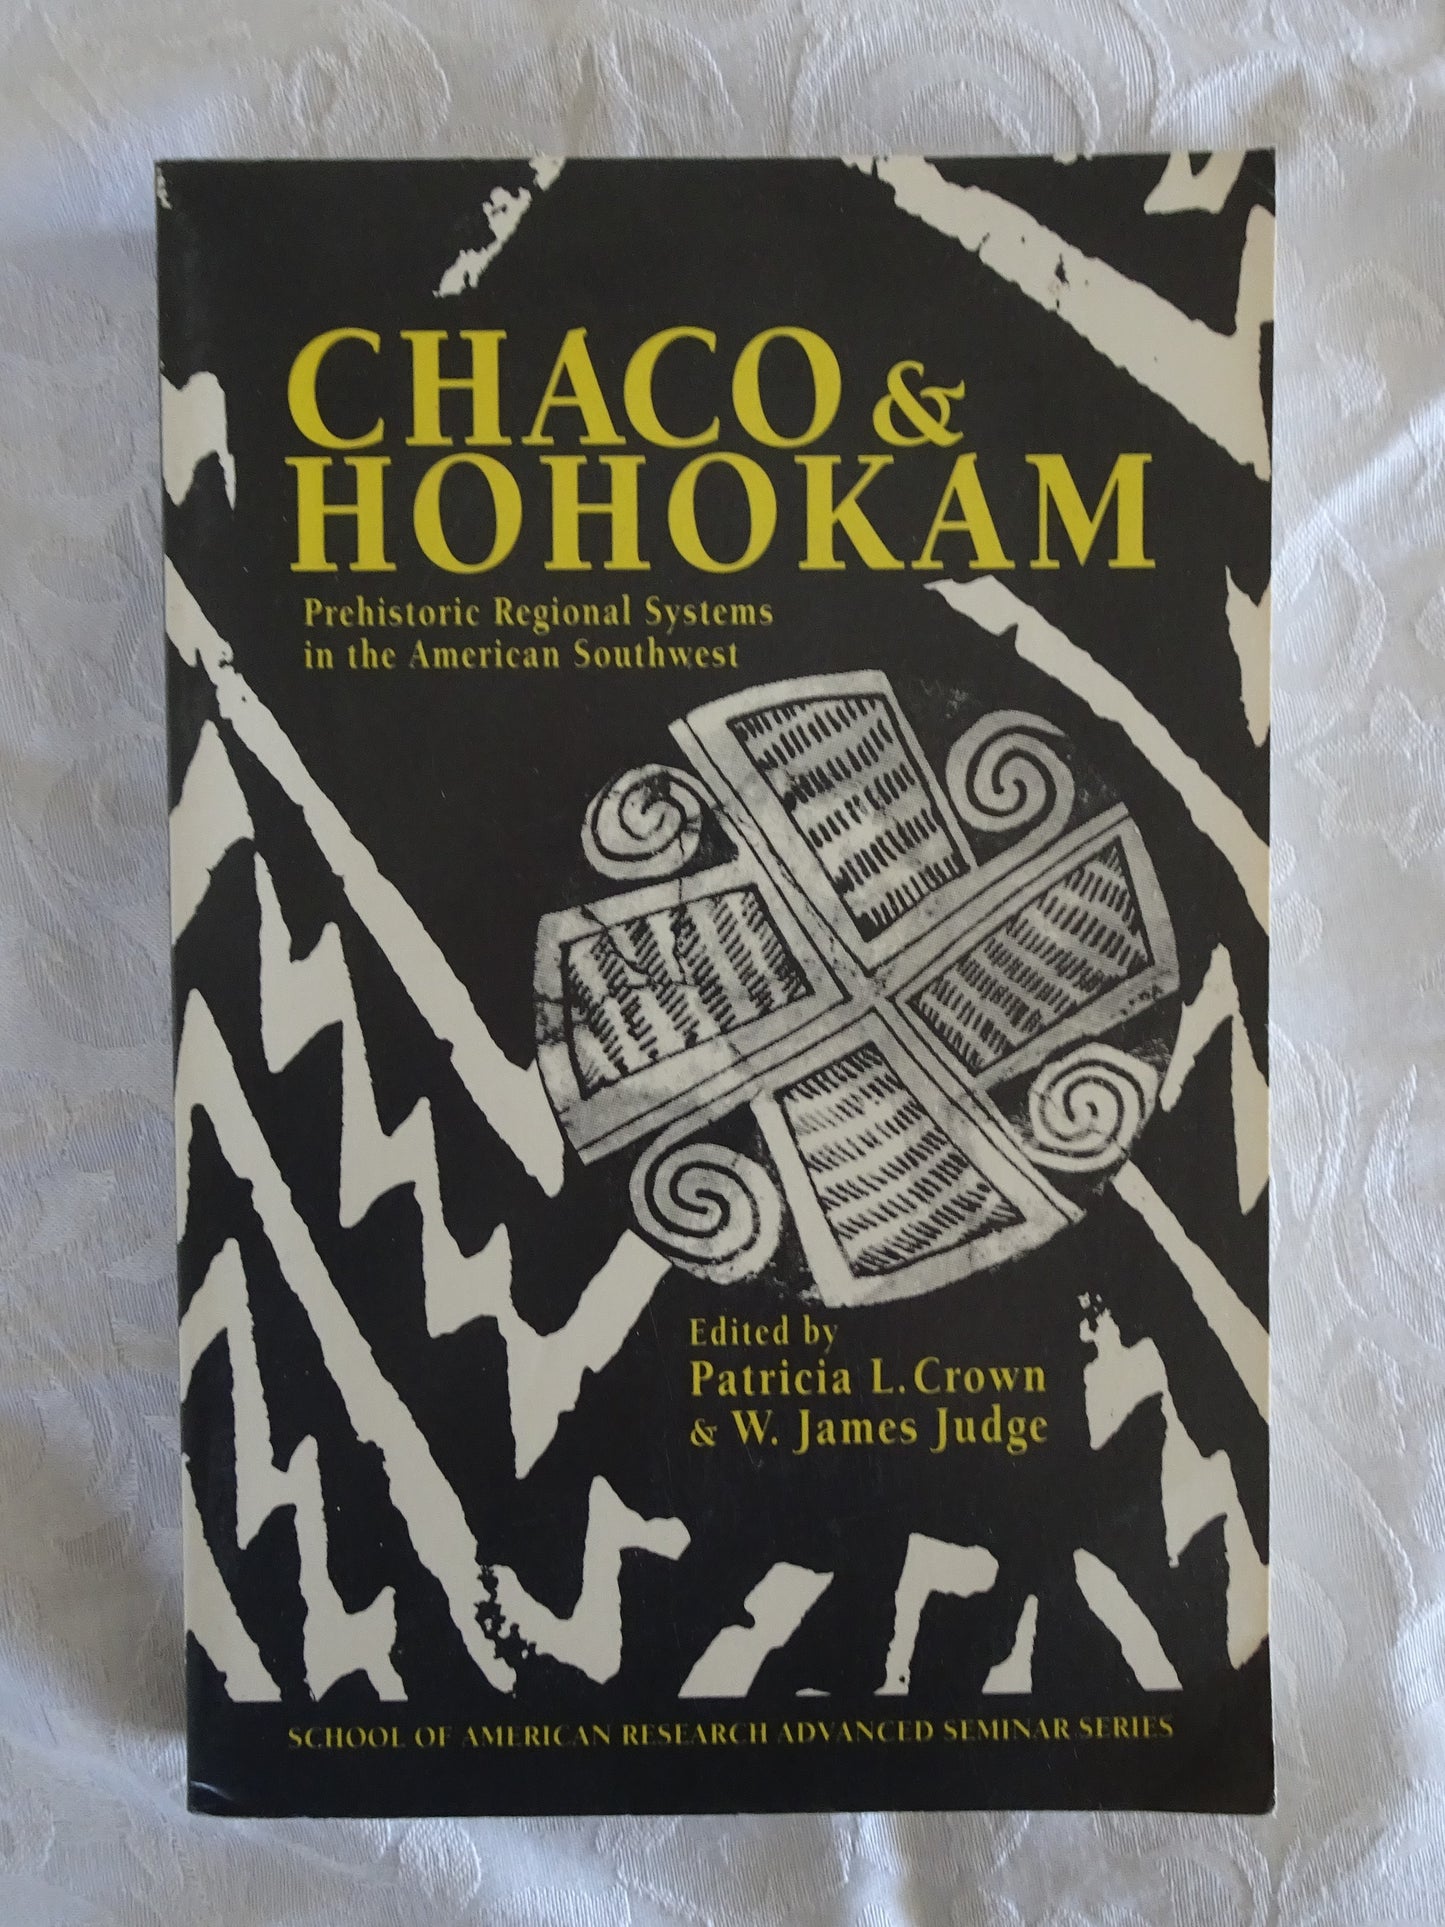 Chaco & Hohokam by Patricia L. Crown & W. James Judge